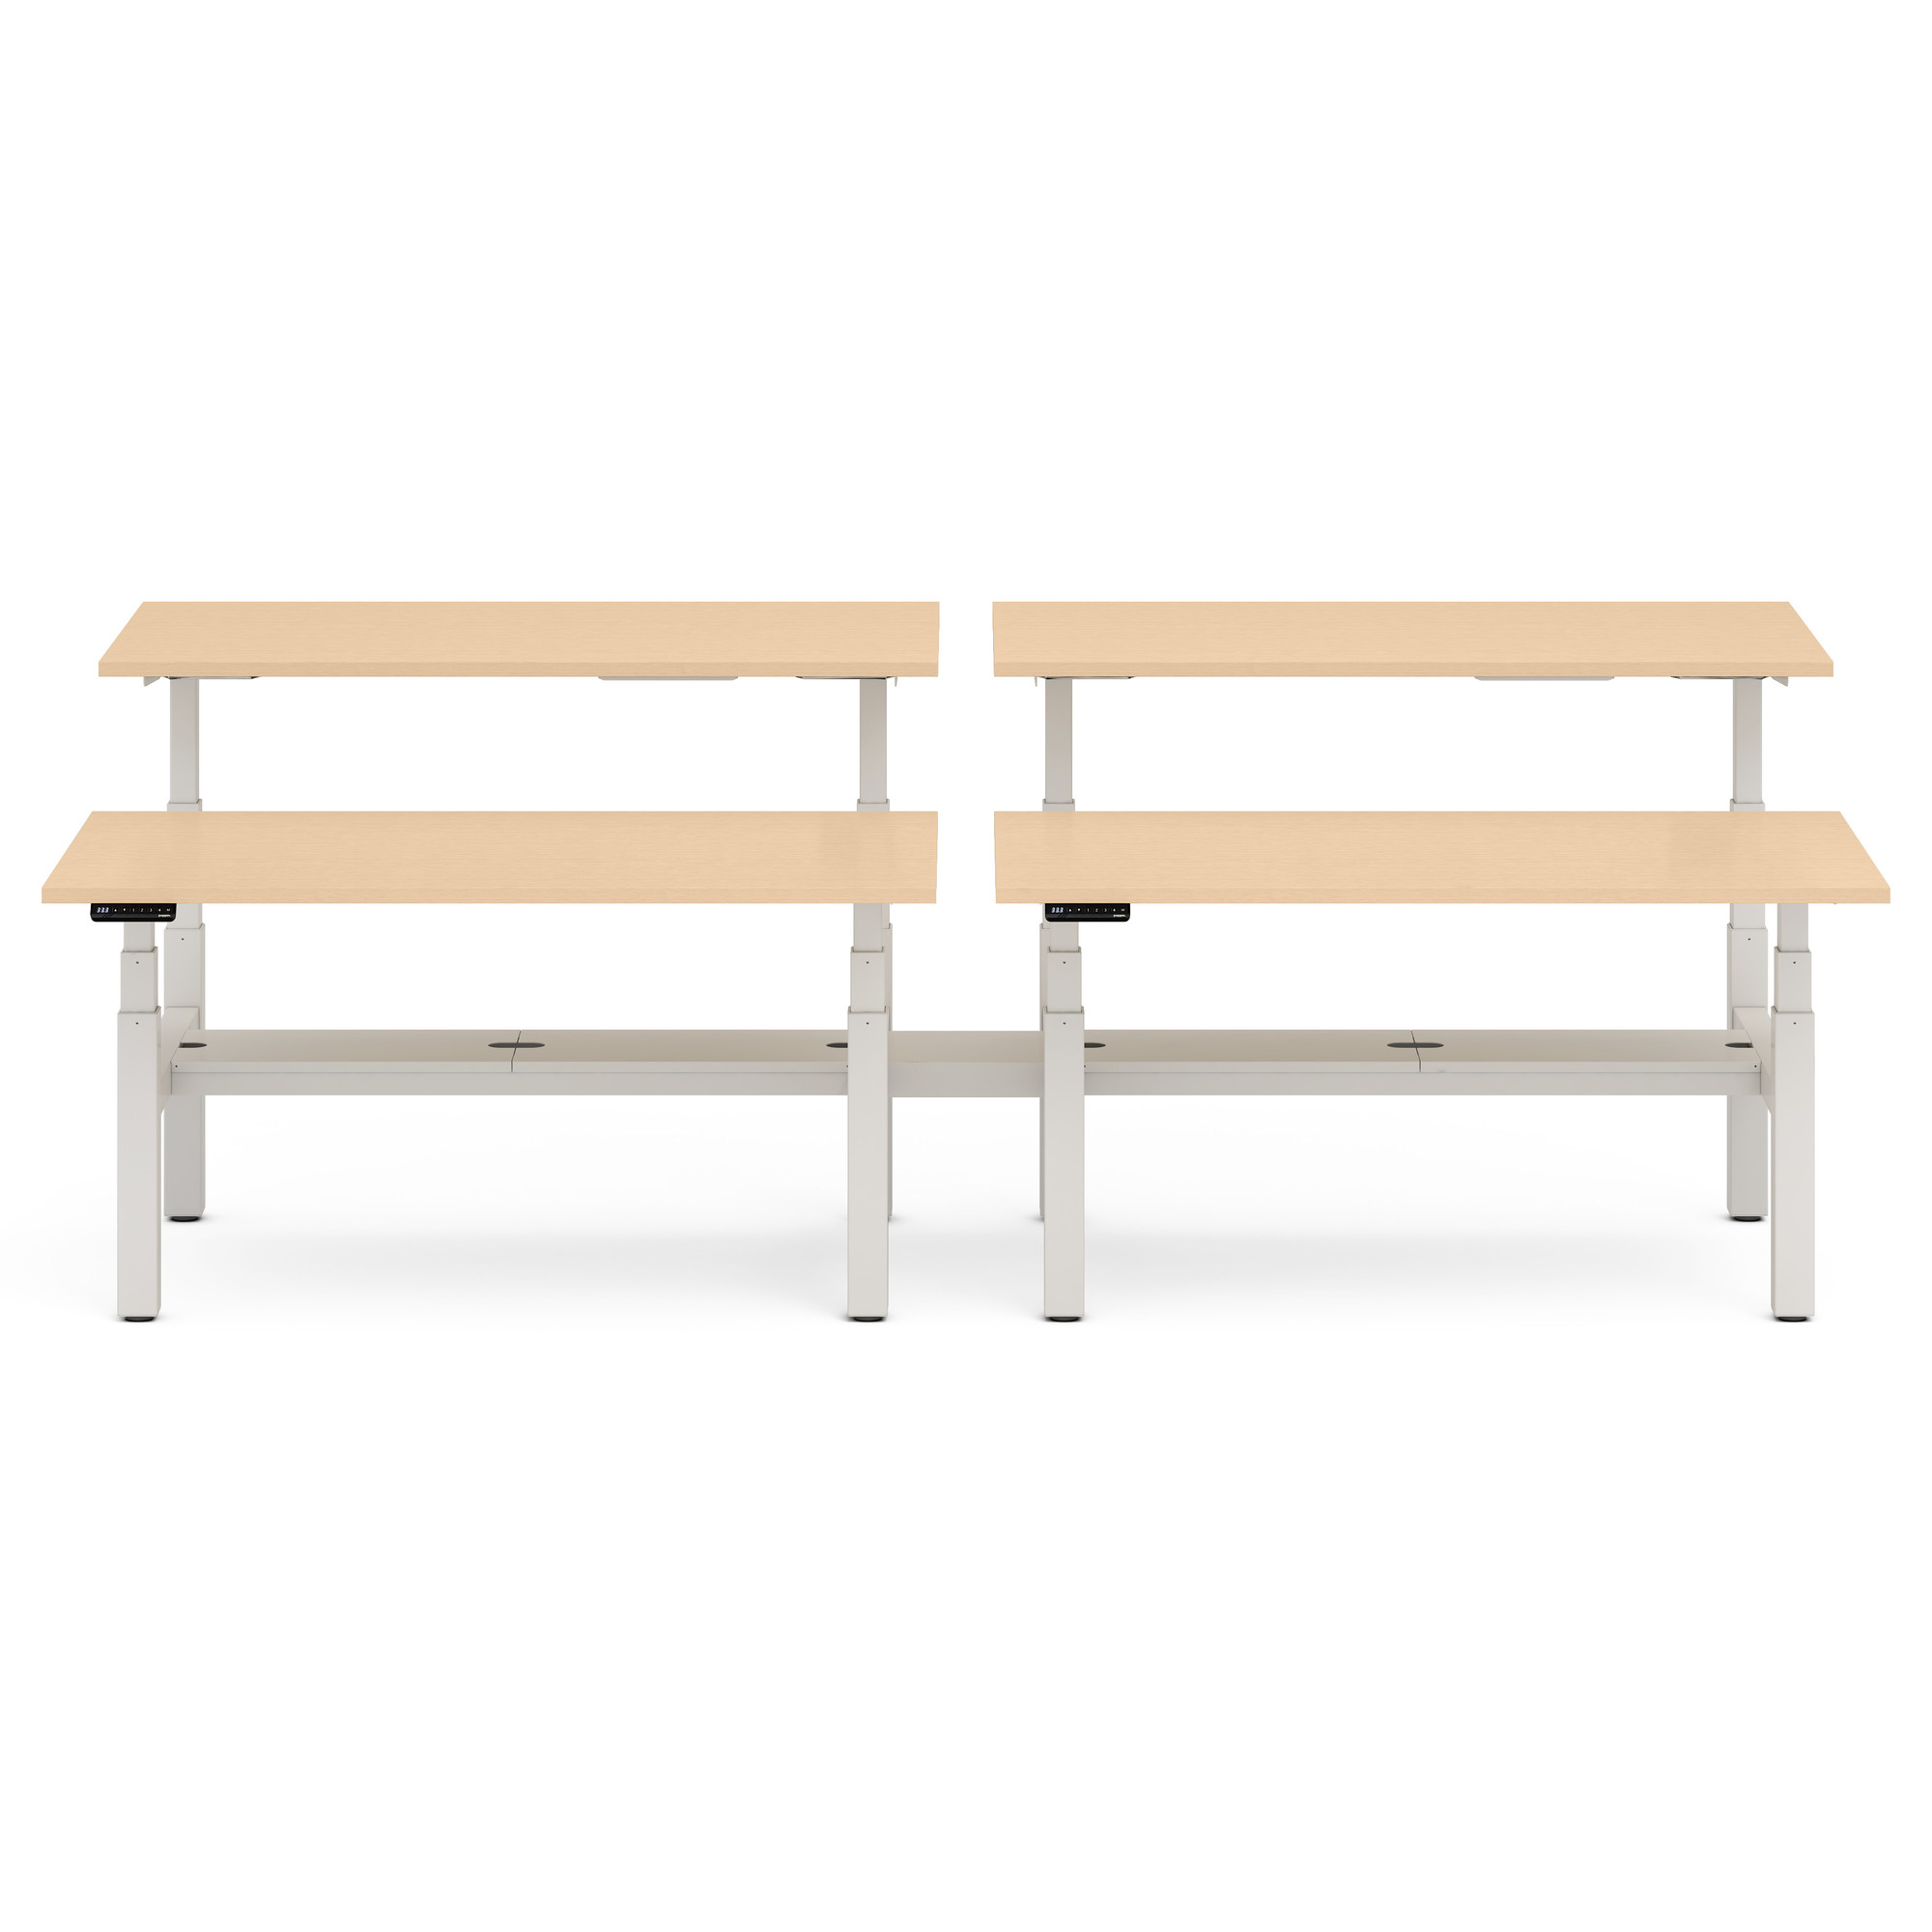 Series L Adjustable Height Double Desk for 4, Natural Oak, 60", White Legs,Natural Oak,hi-res